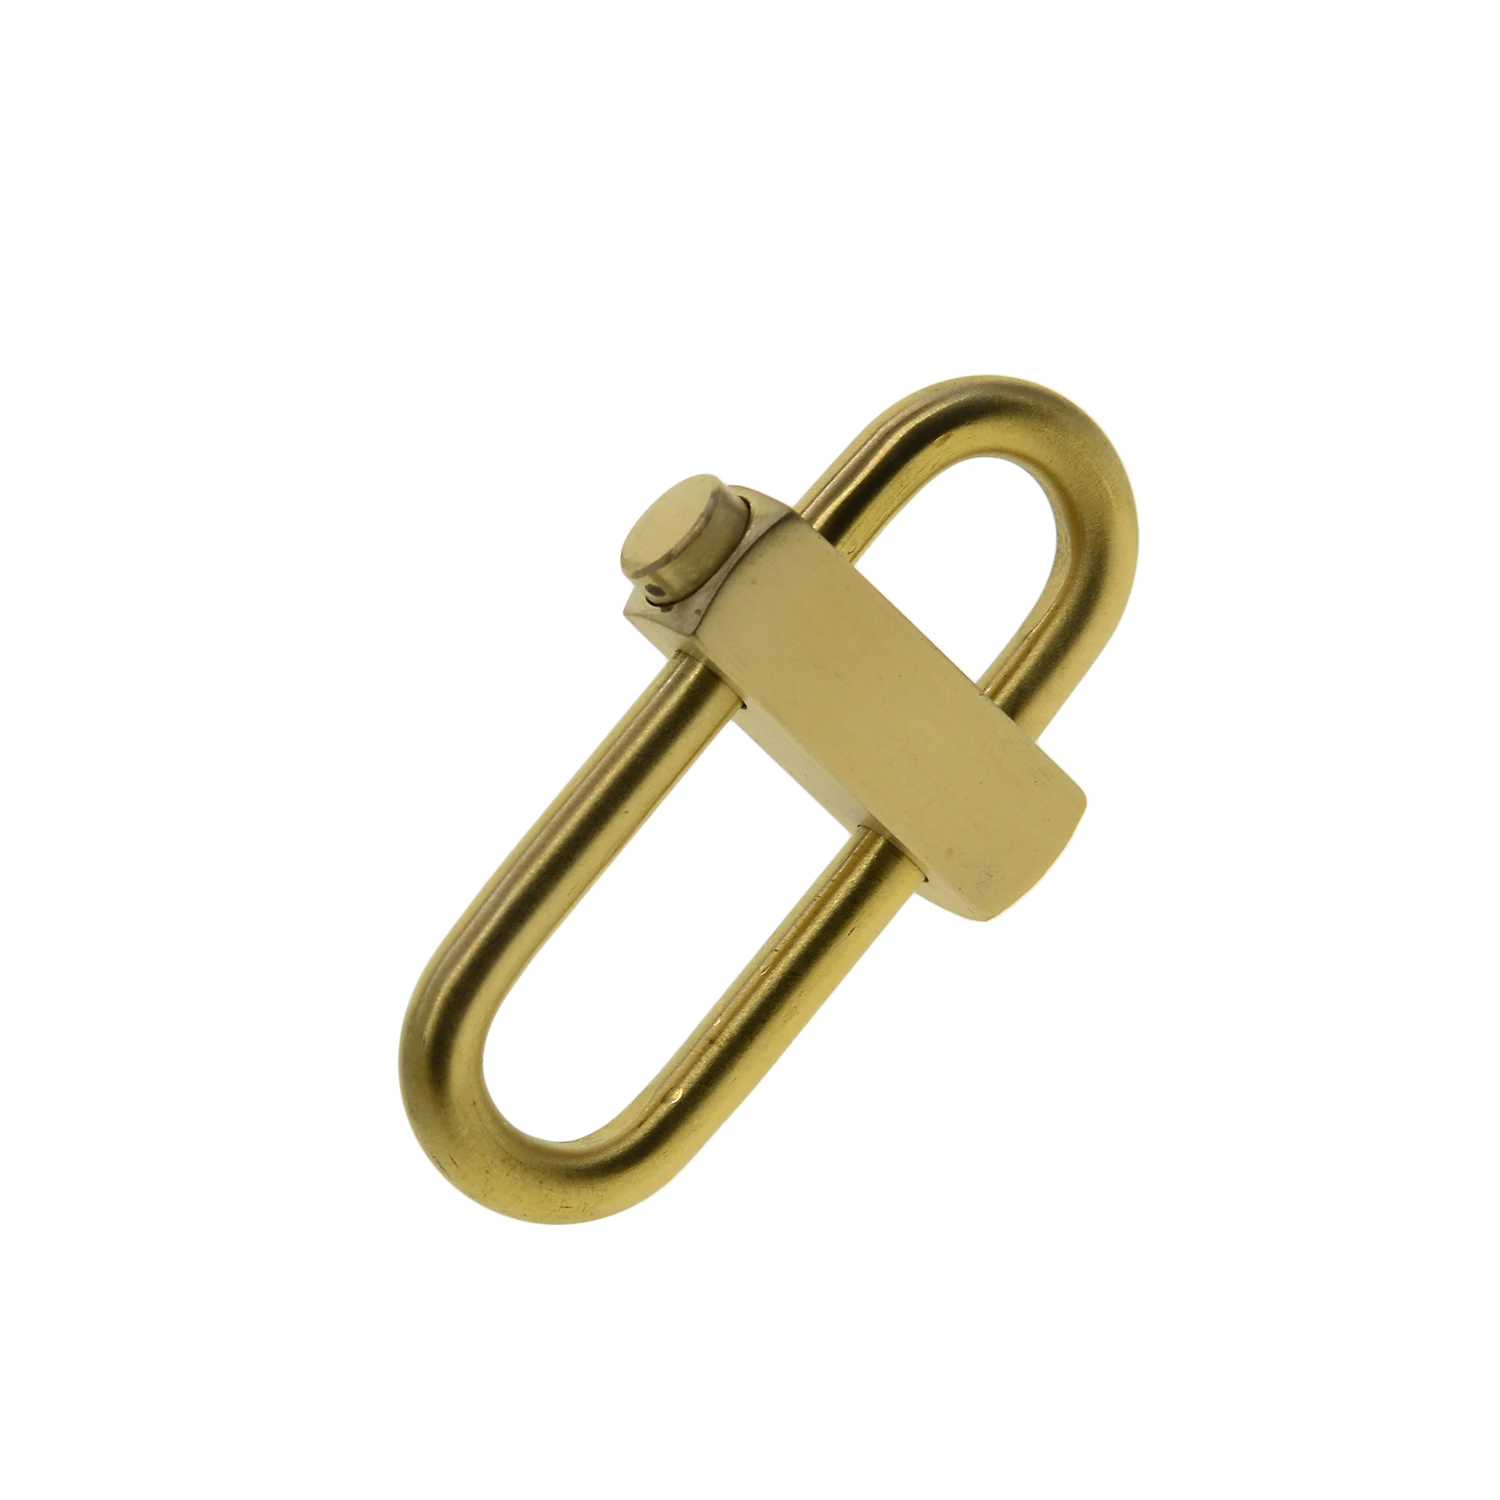 Super fine handmade matte Heavy duty Solid brass Oval snap lock slide locking Carabiner quick release FOB EDC  keychains